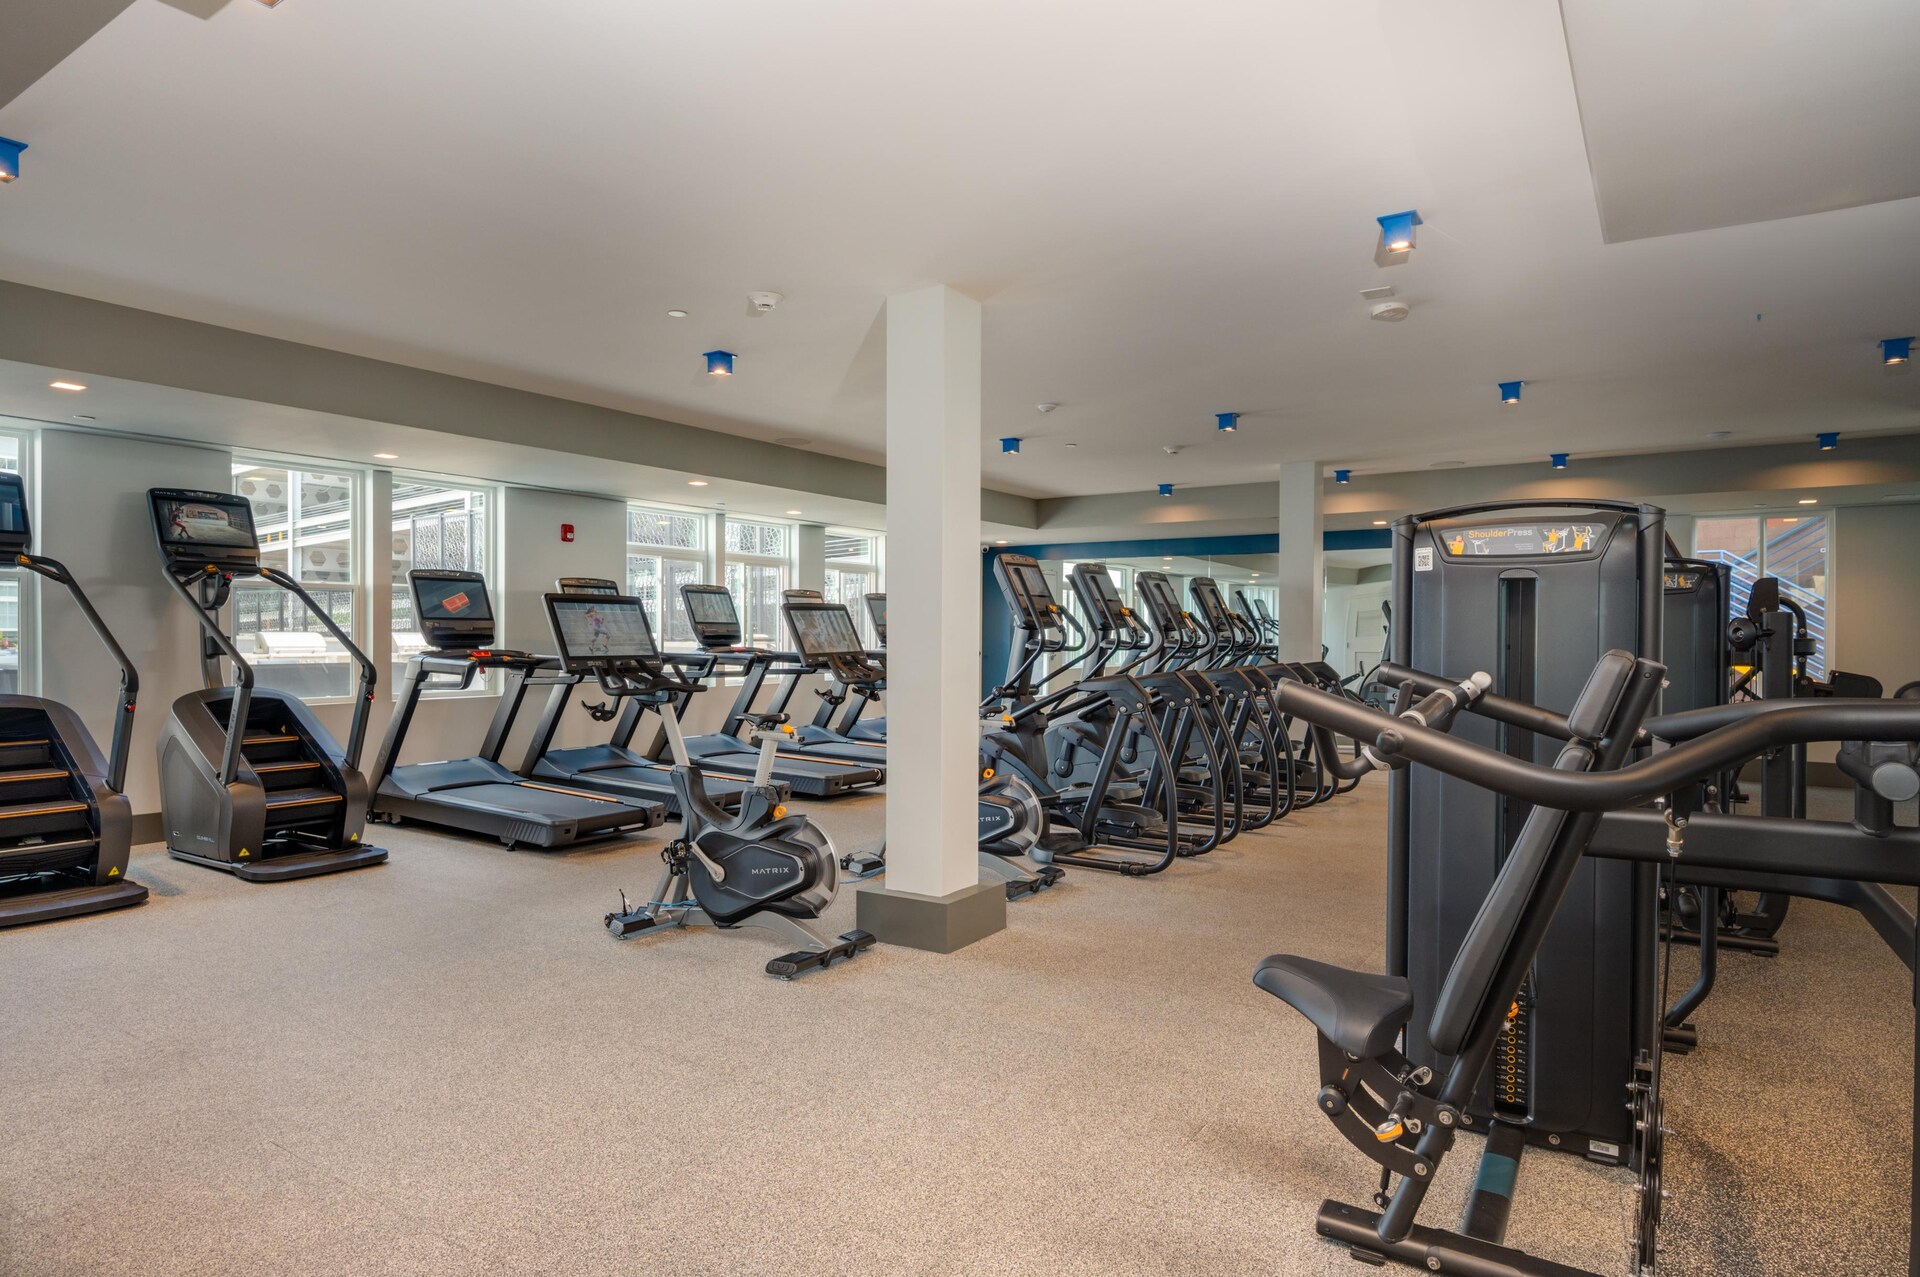 Fitness room with cardio equipment.